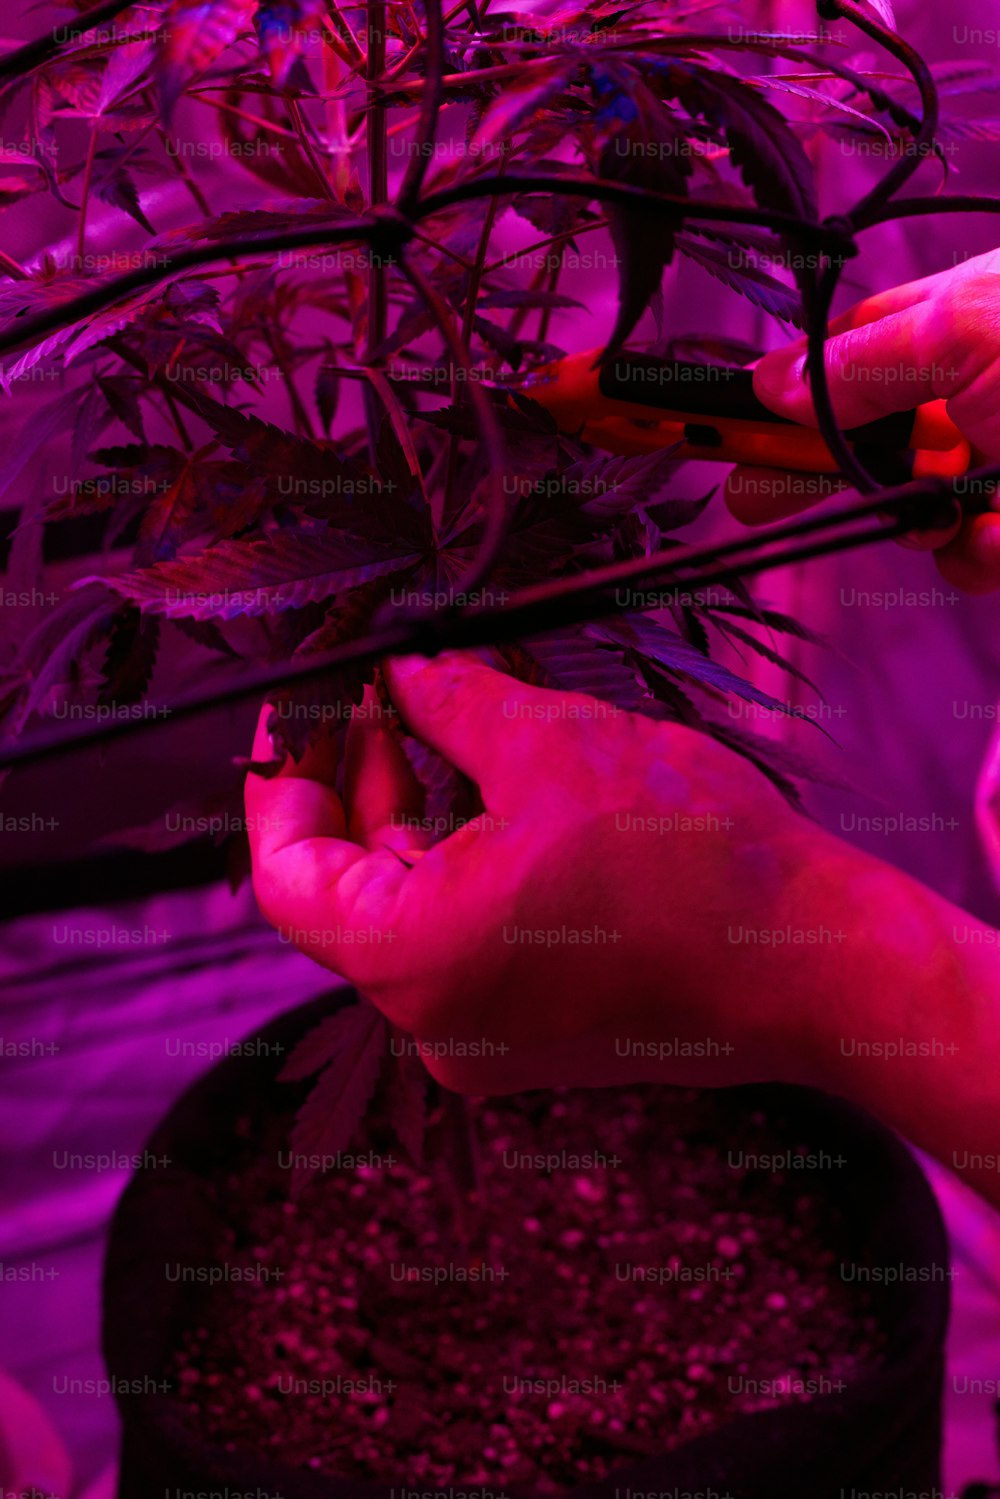 Una persona sta potando una pianta con le forbici